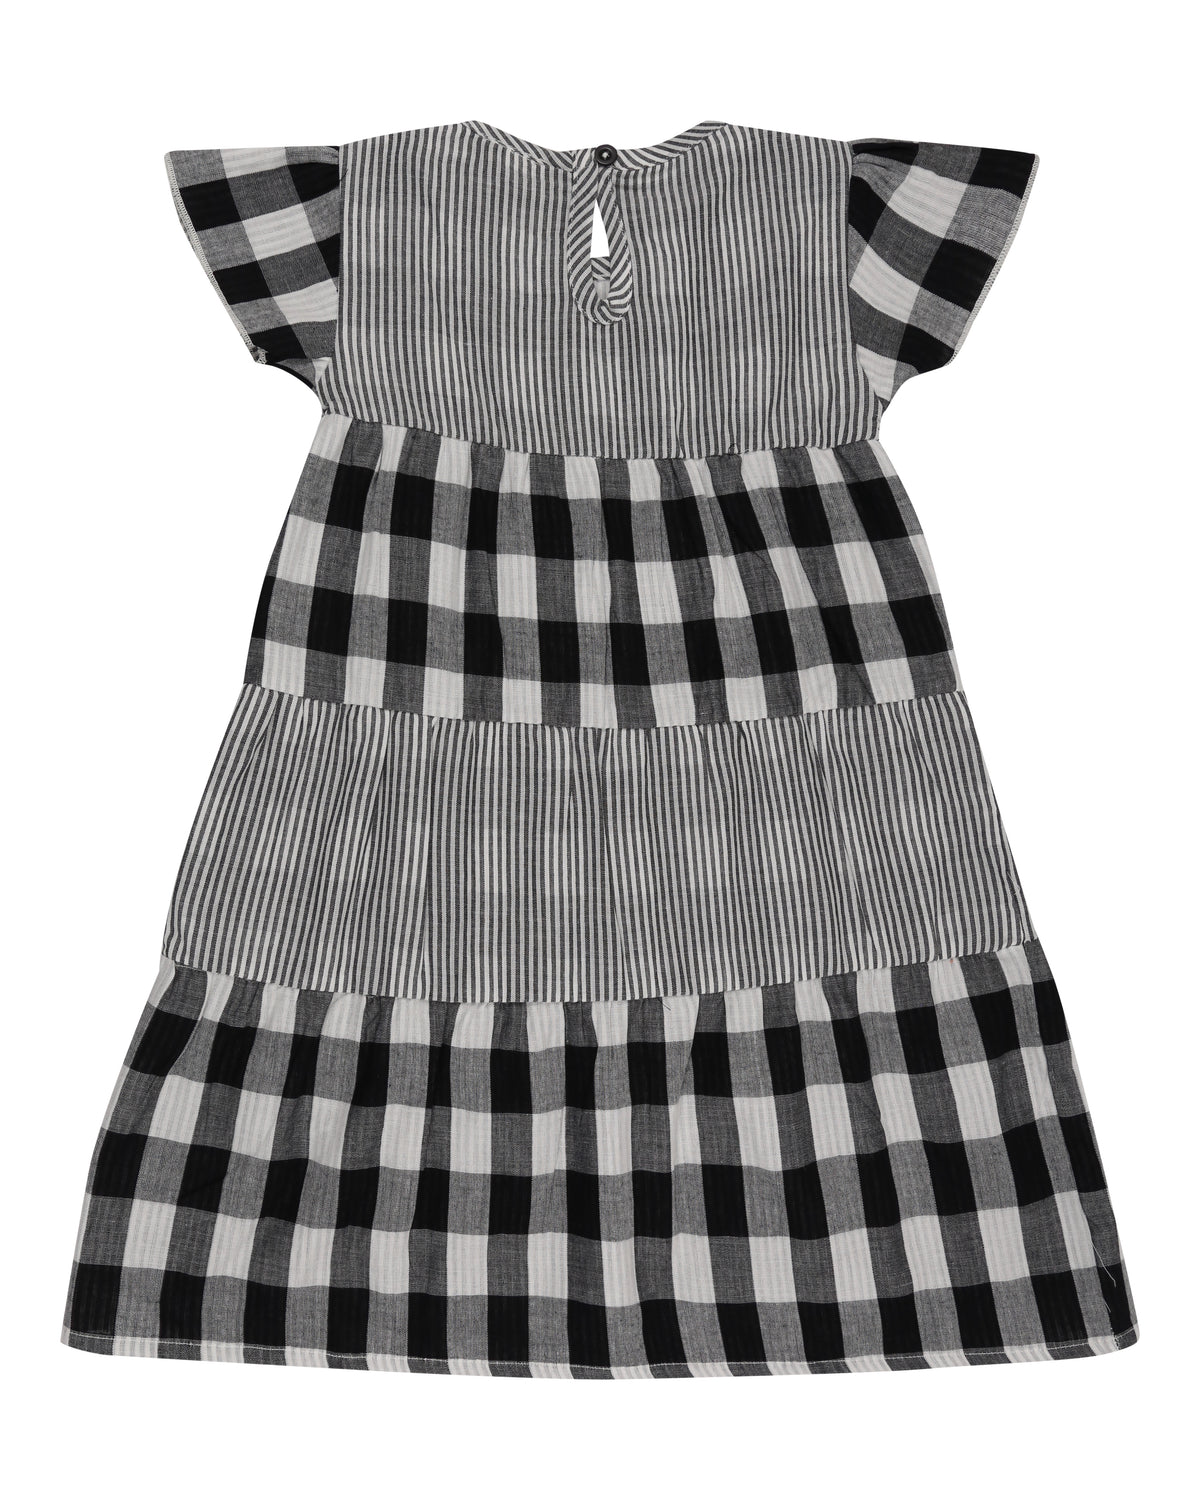 Tiered Stripe/Check Dress